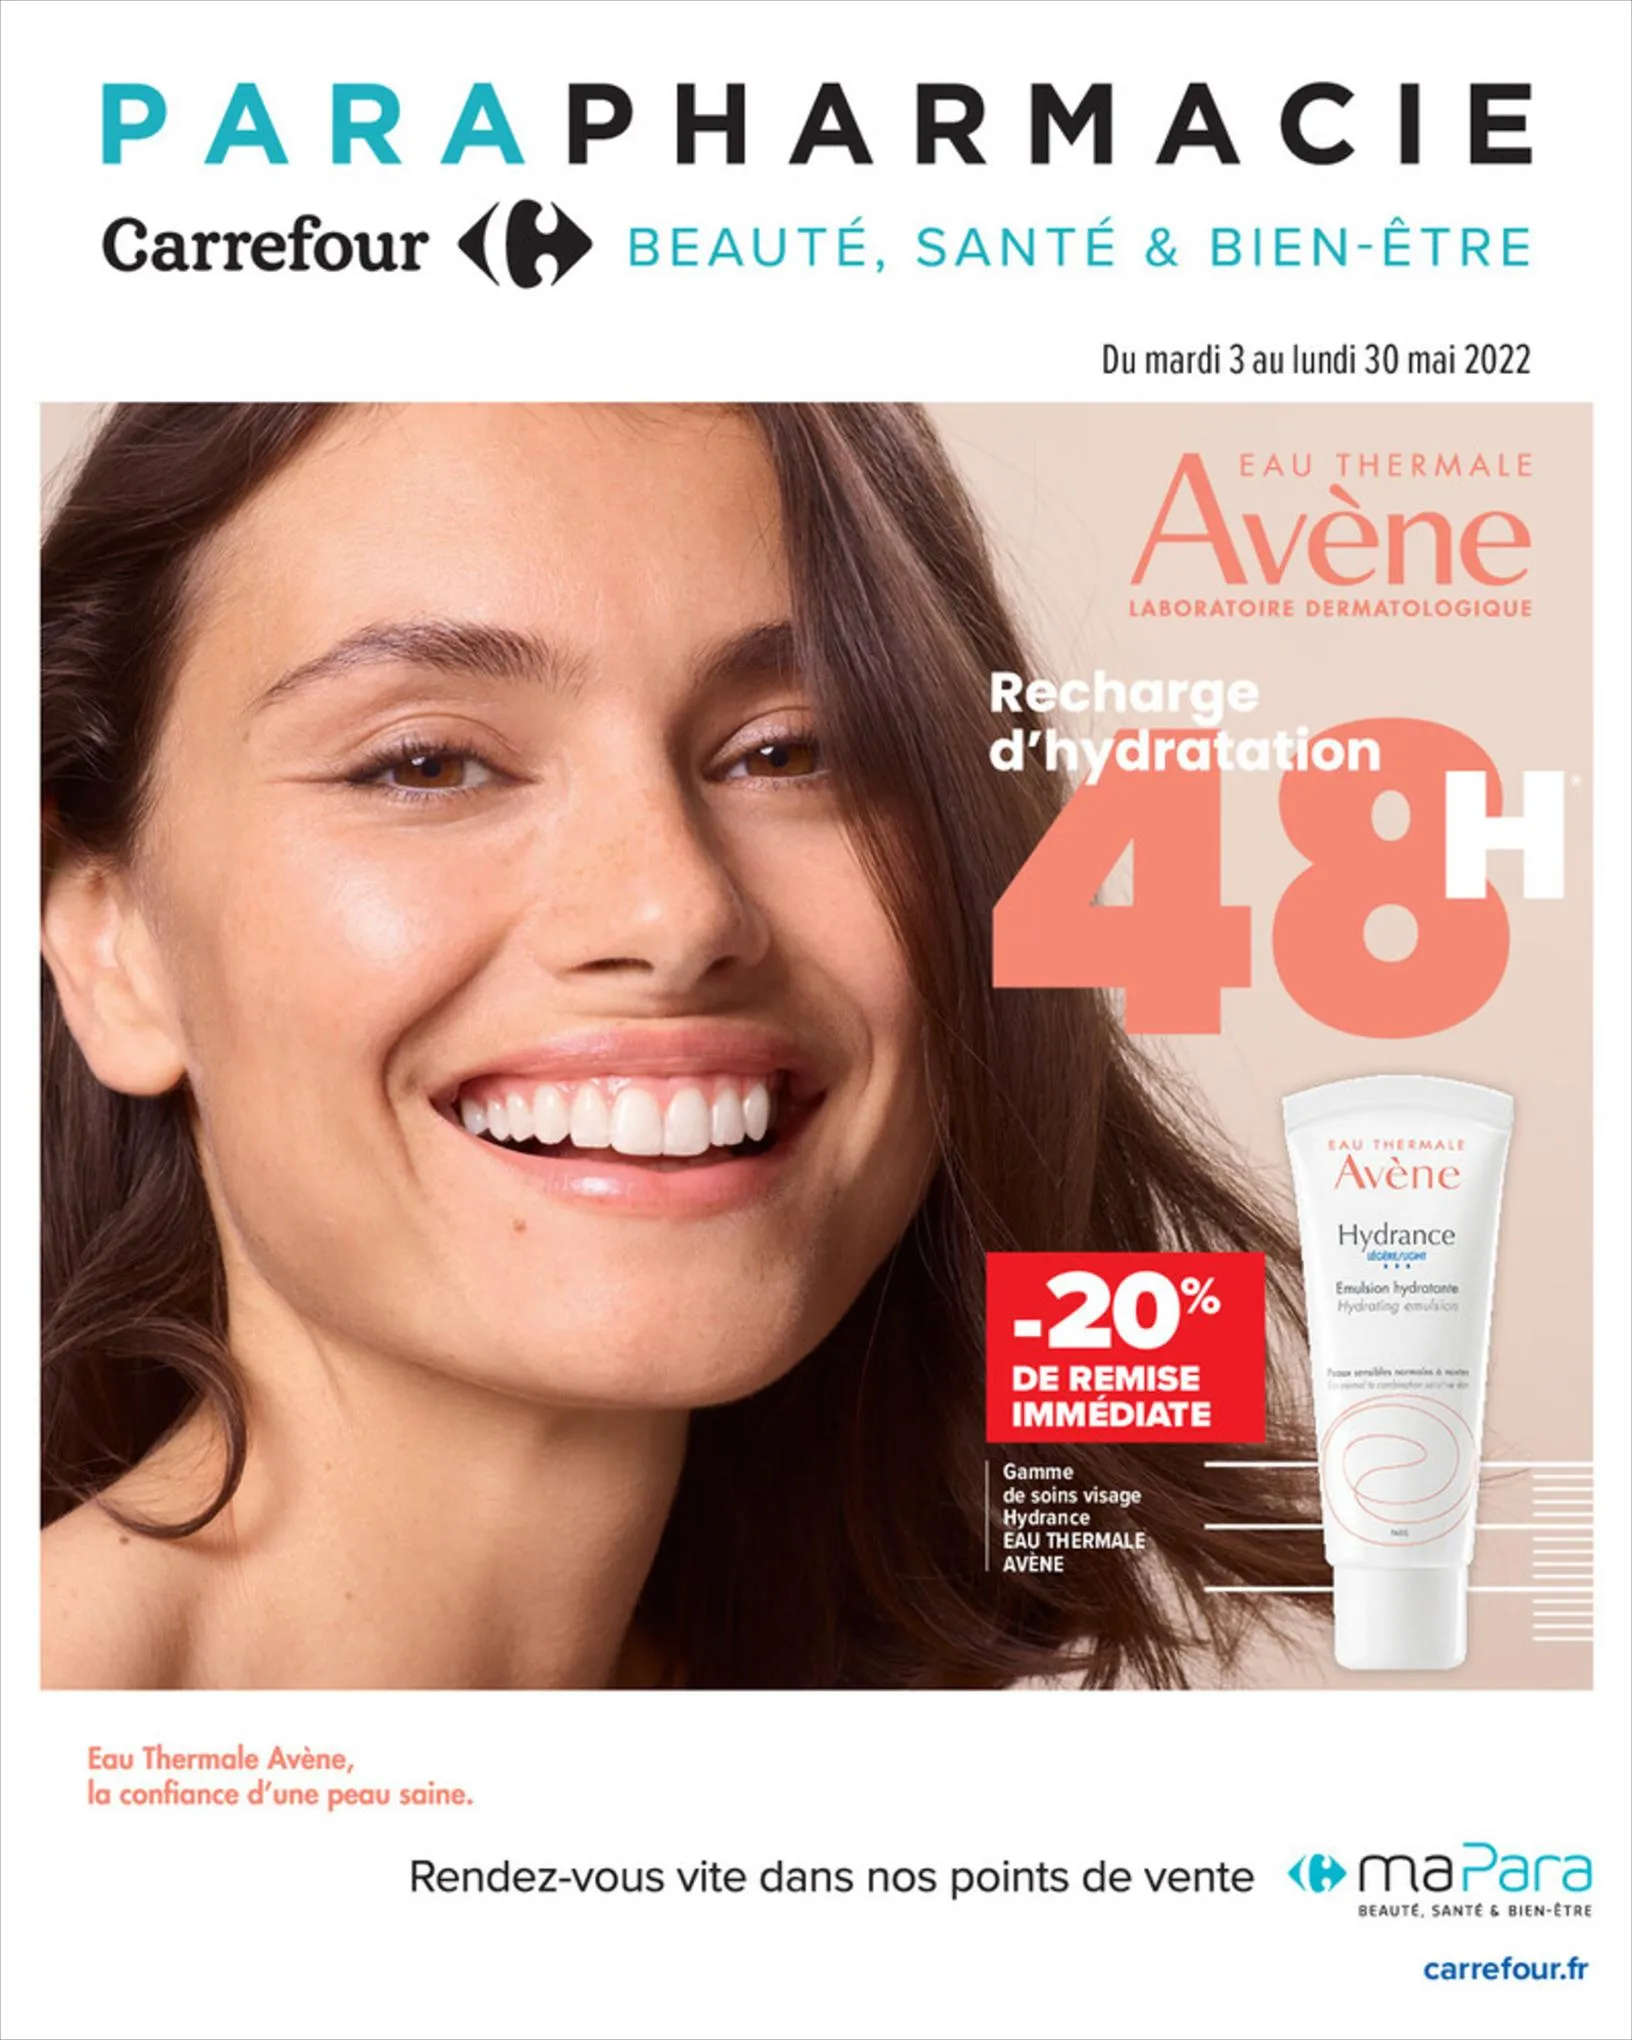 Catalogue Catalogue Carrefour Drive, page 00001